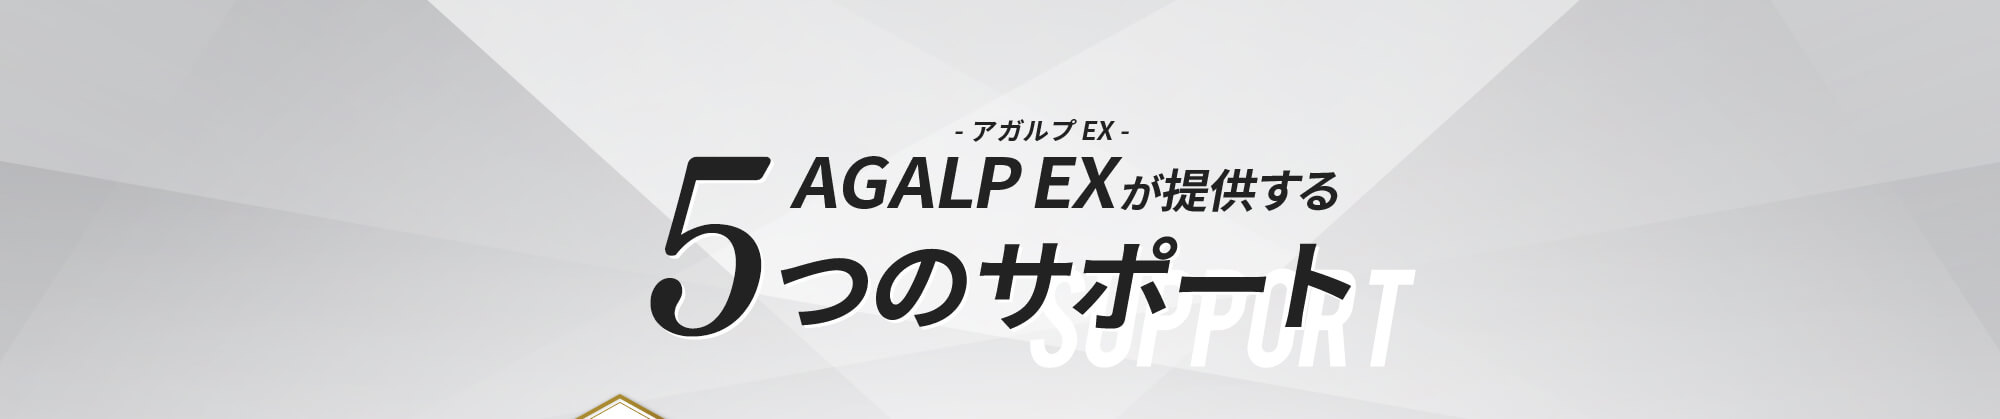 AGALP EXが提供する5つのサポート